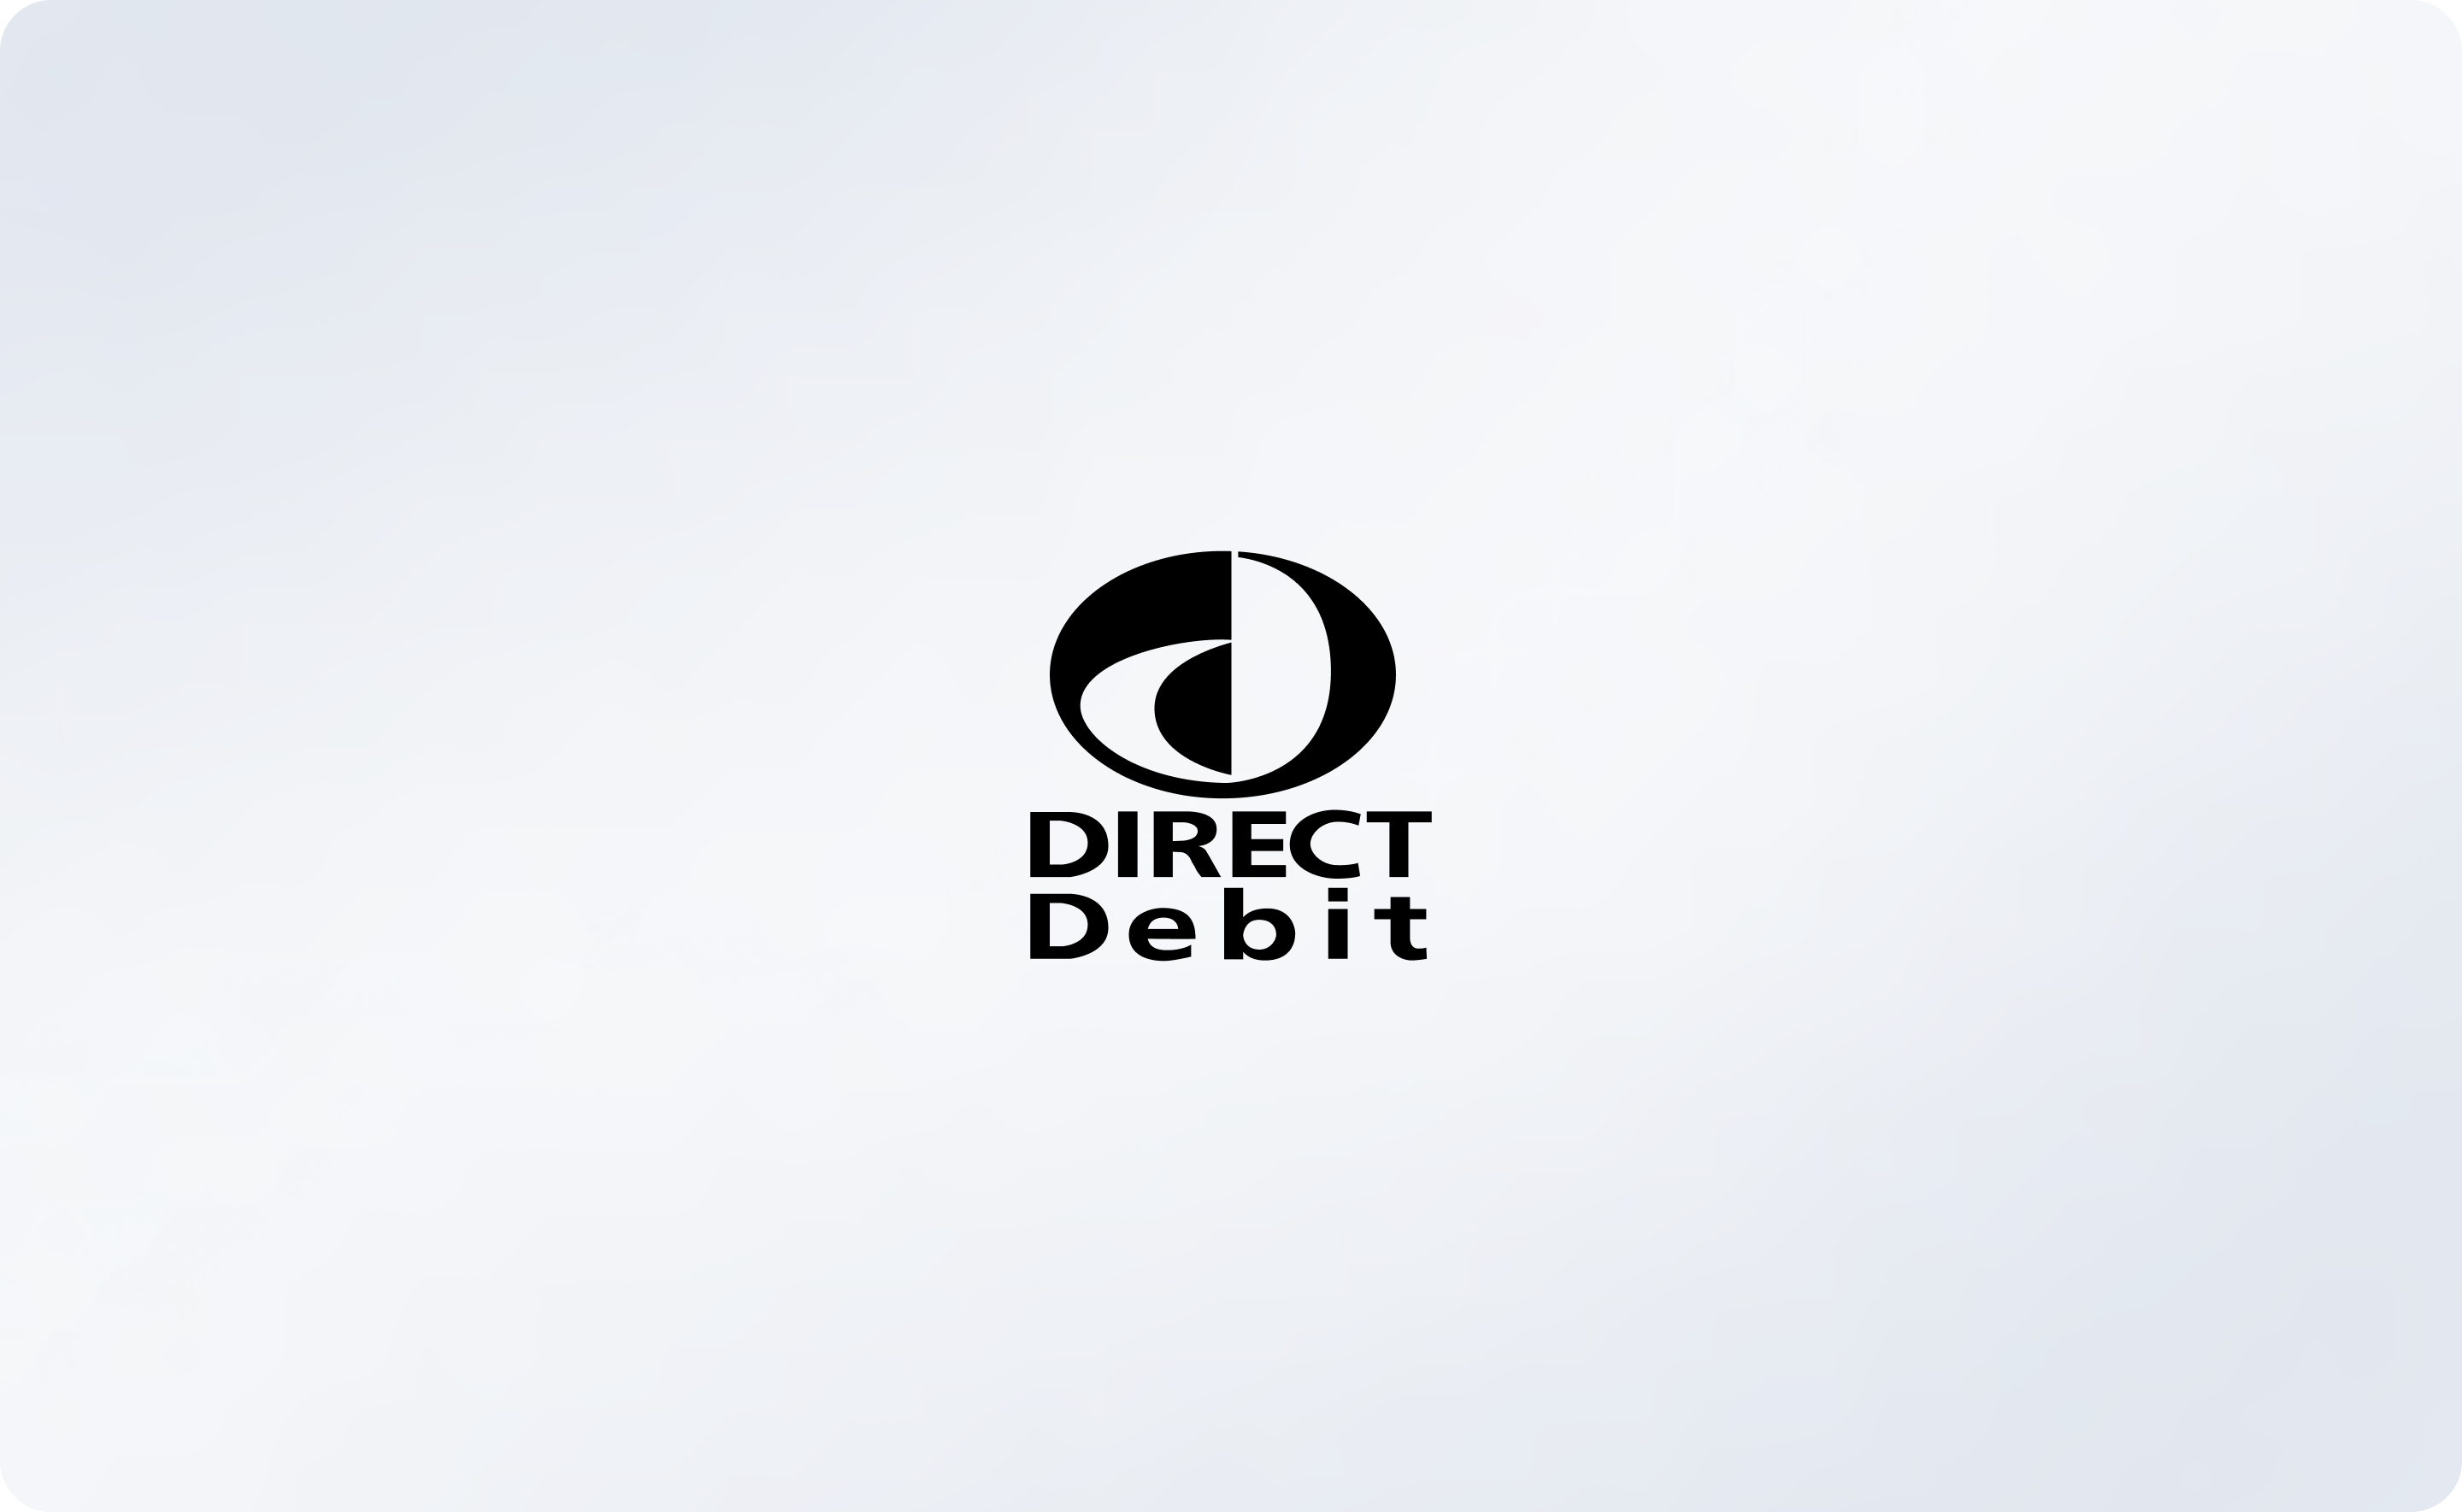 Viewing Direct Debit transactions